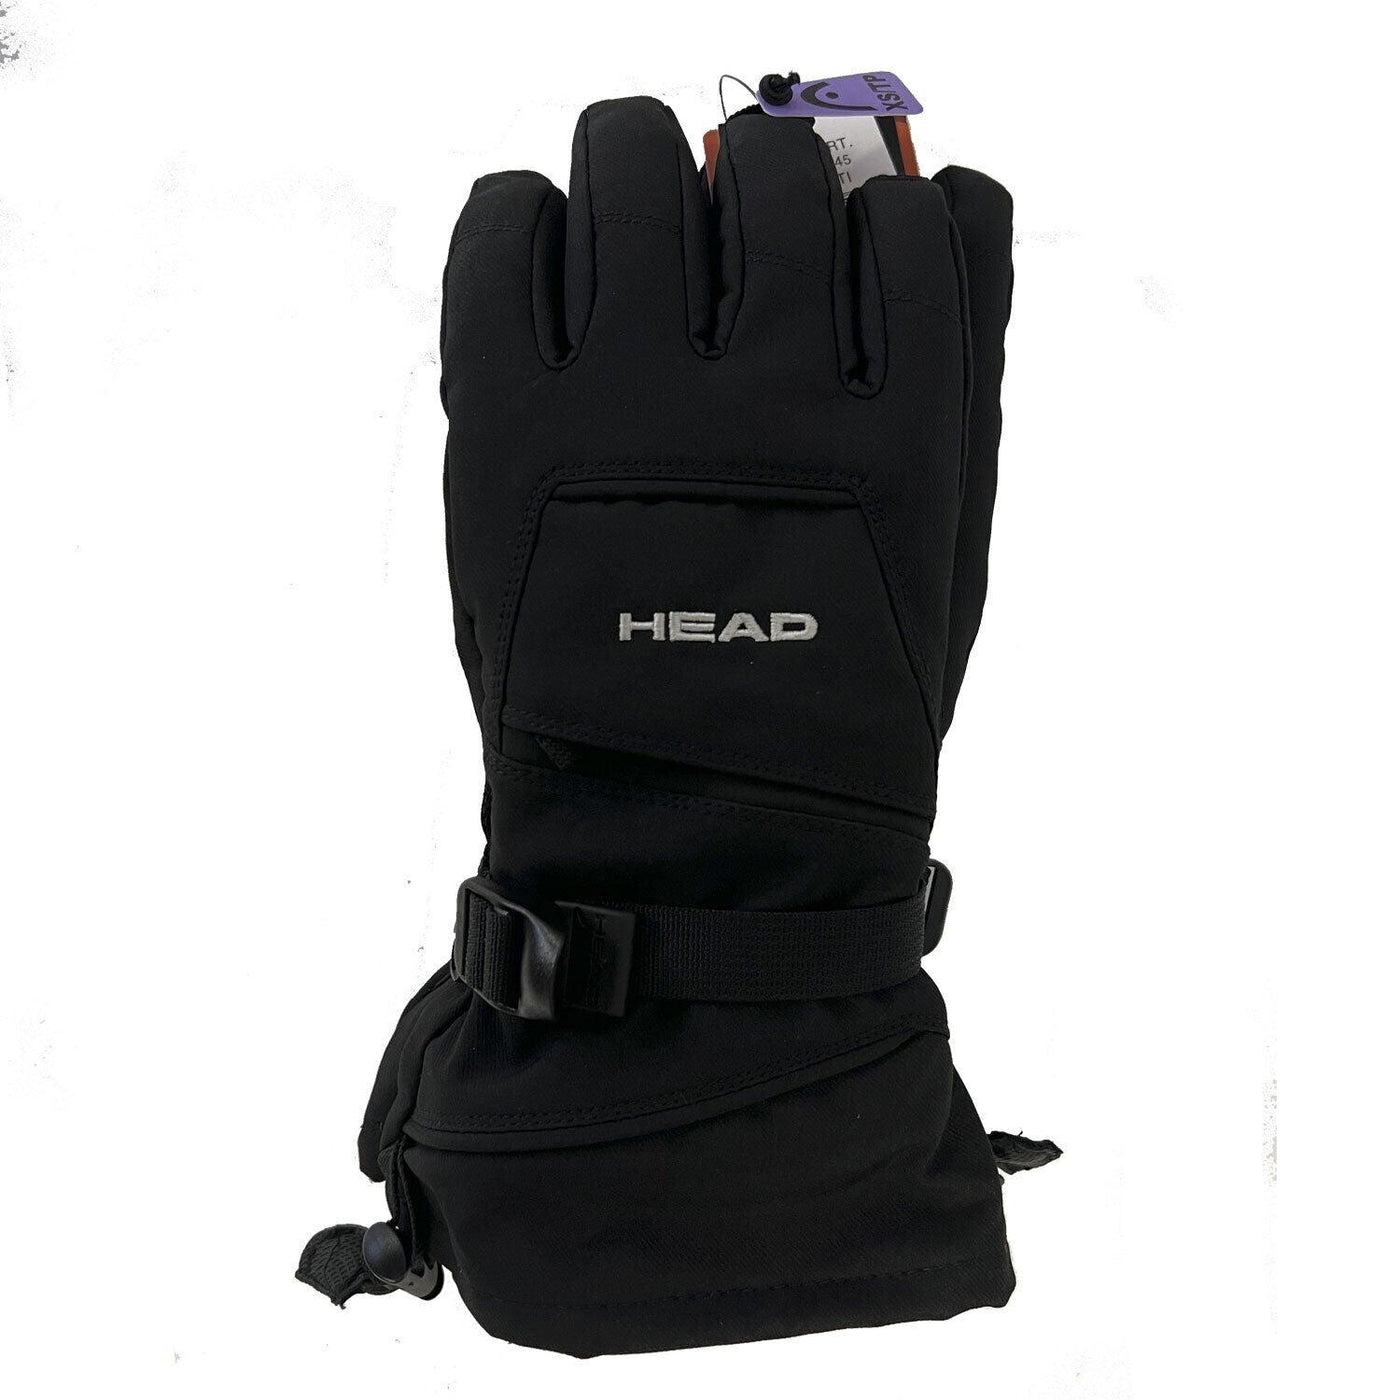 Head Black Snow Gloves Waterproof Windproof Insert Touchscreen Compatible